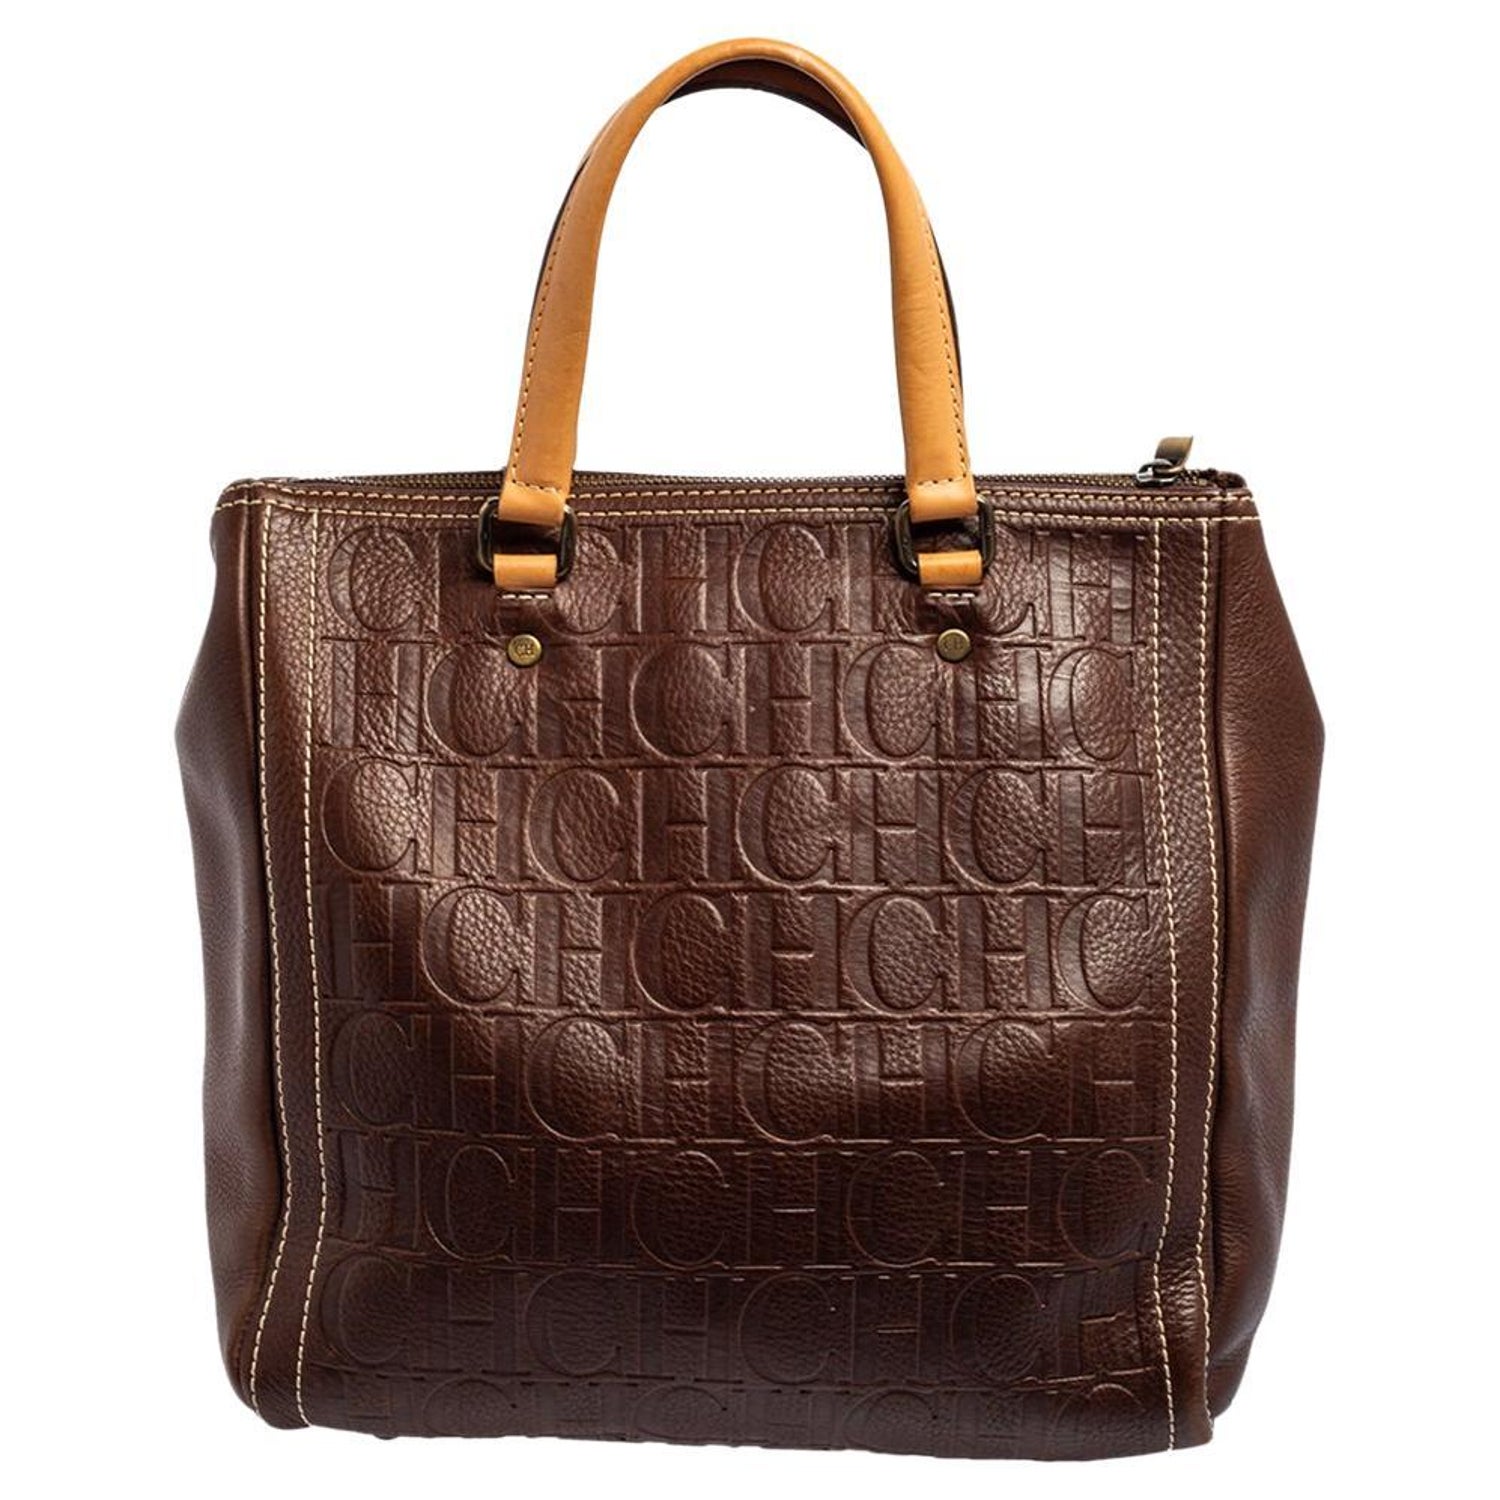 Carolina Herrera Andy Bag - For Sale on 1stDibs | andy bags, ch andy bag, andy  bag carolina herrera